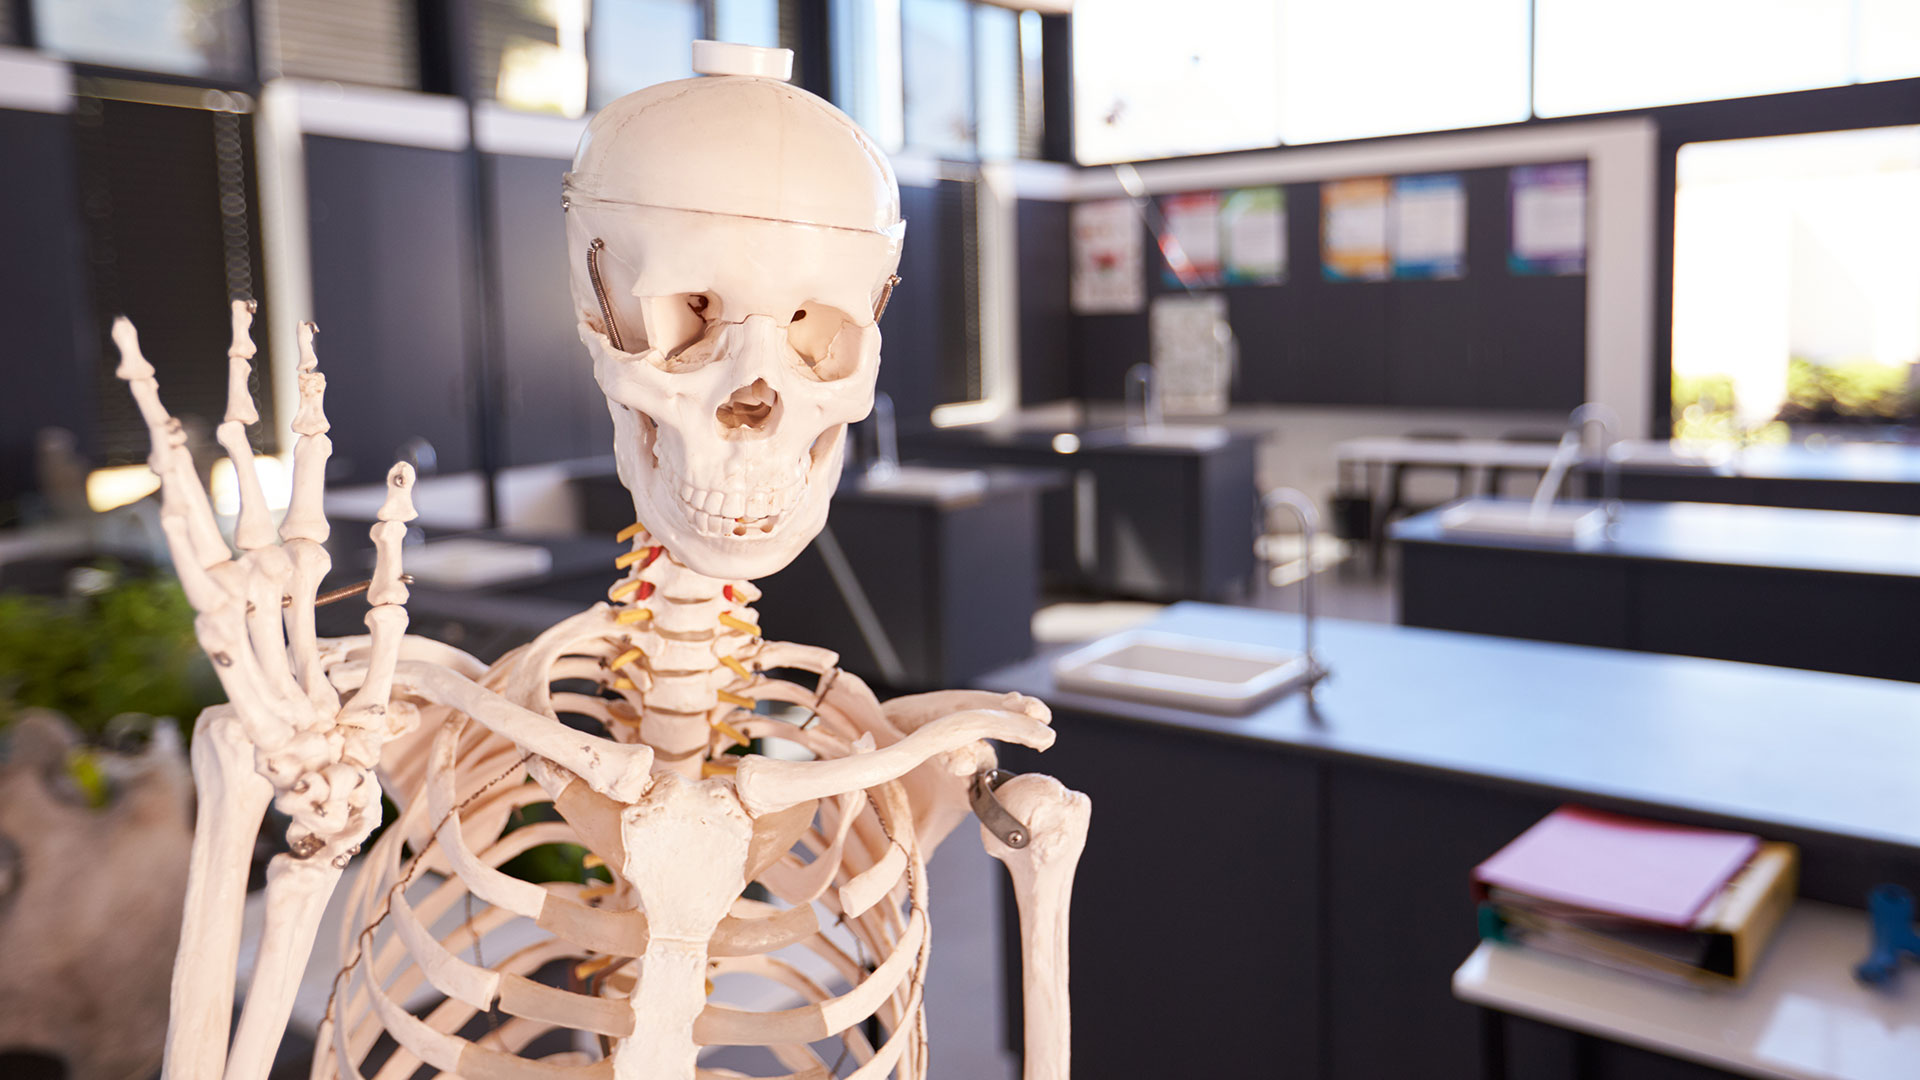 School skeleton in science class room